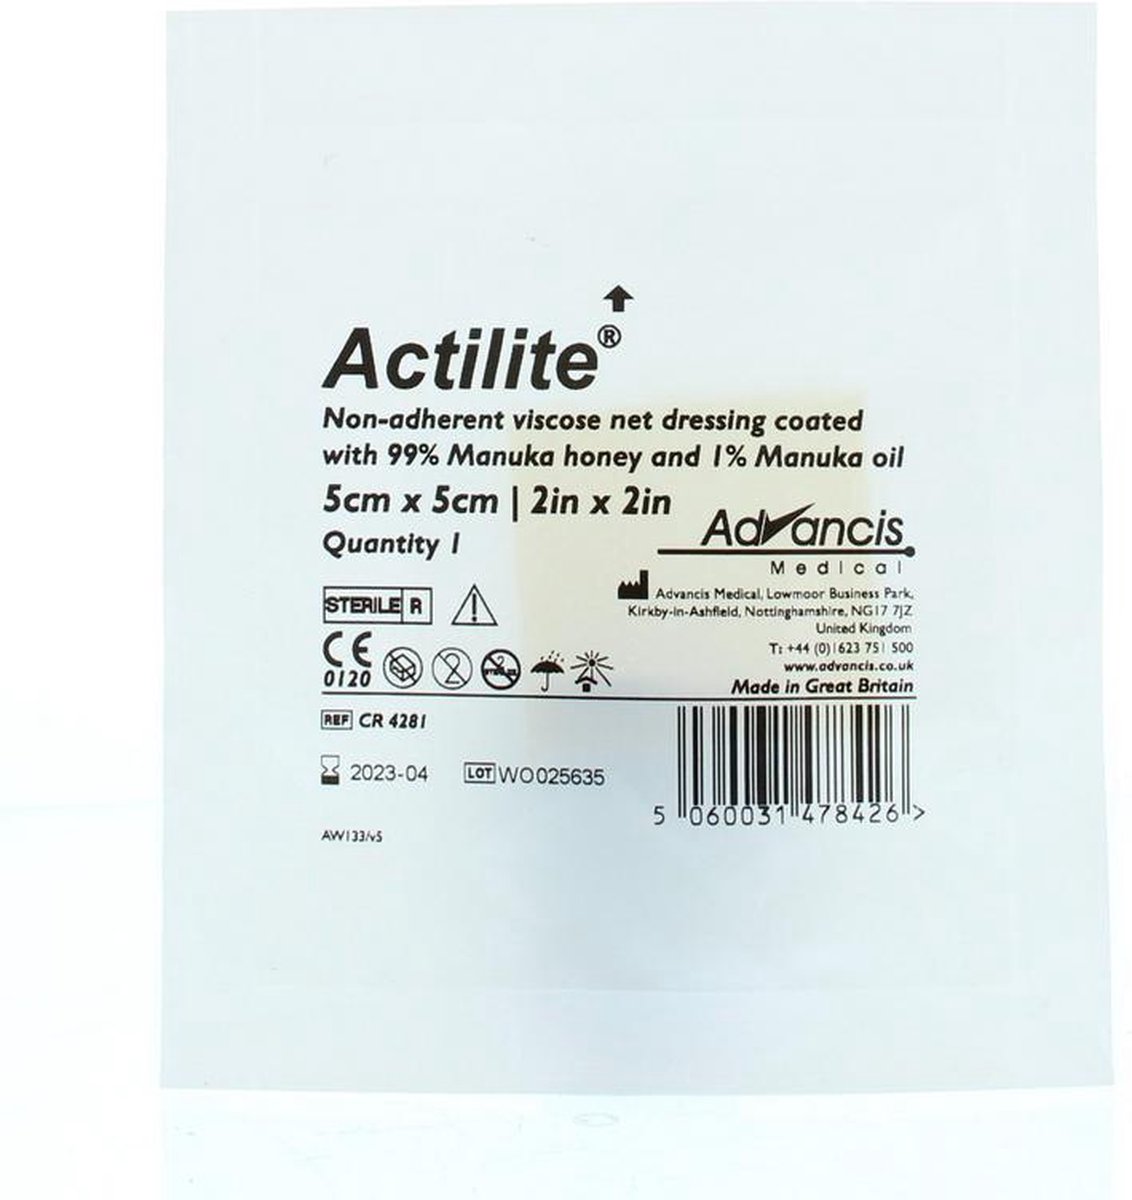 Advancis Actilite Manuka Non Adh. Net Bandage Viscose, 5 X 5, 1 Units